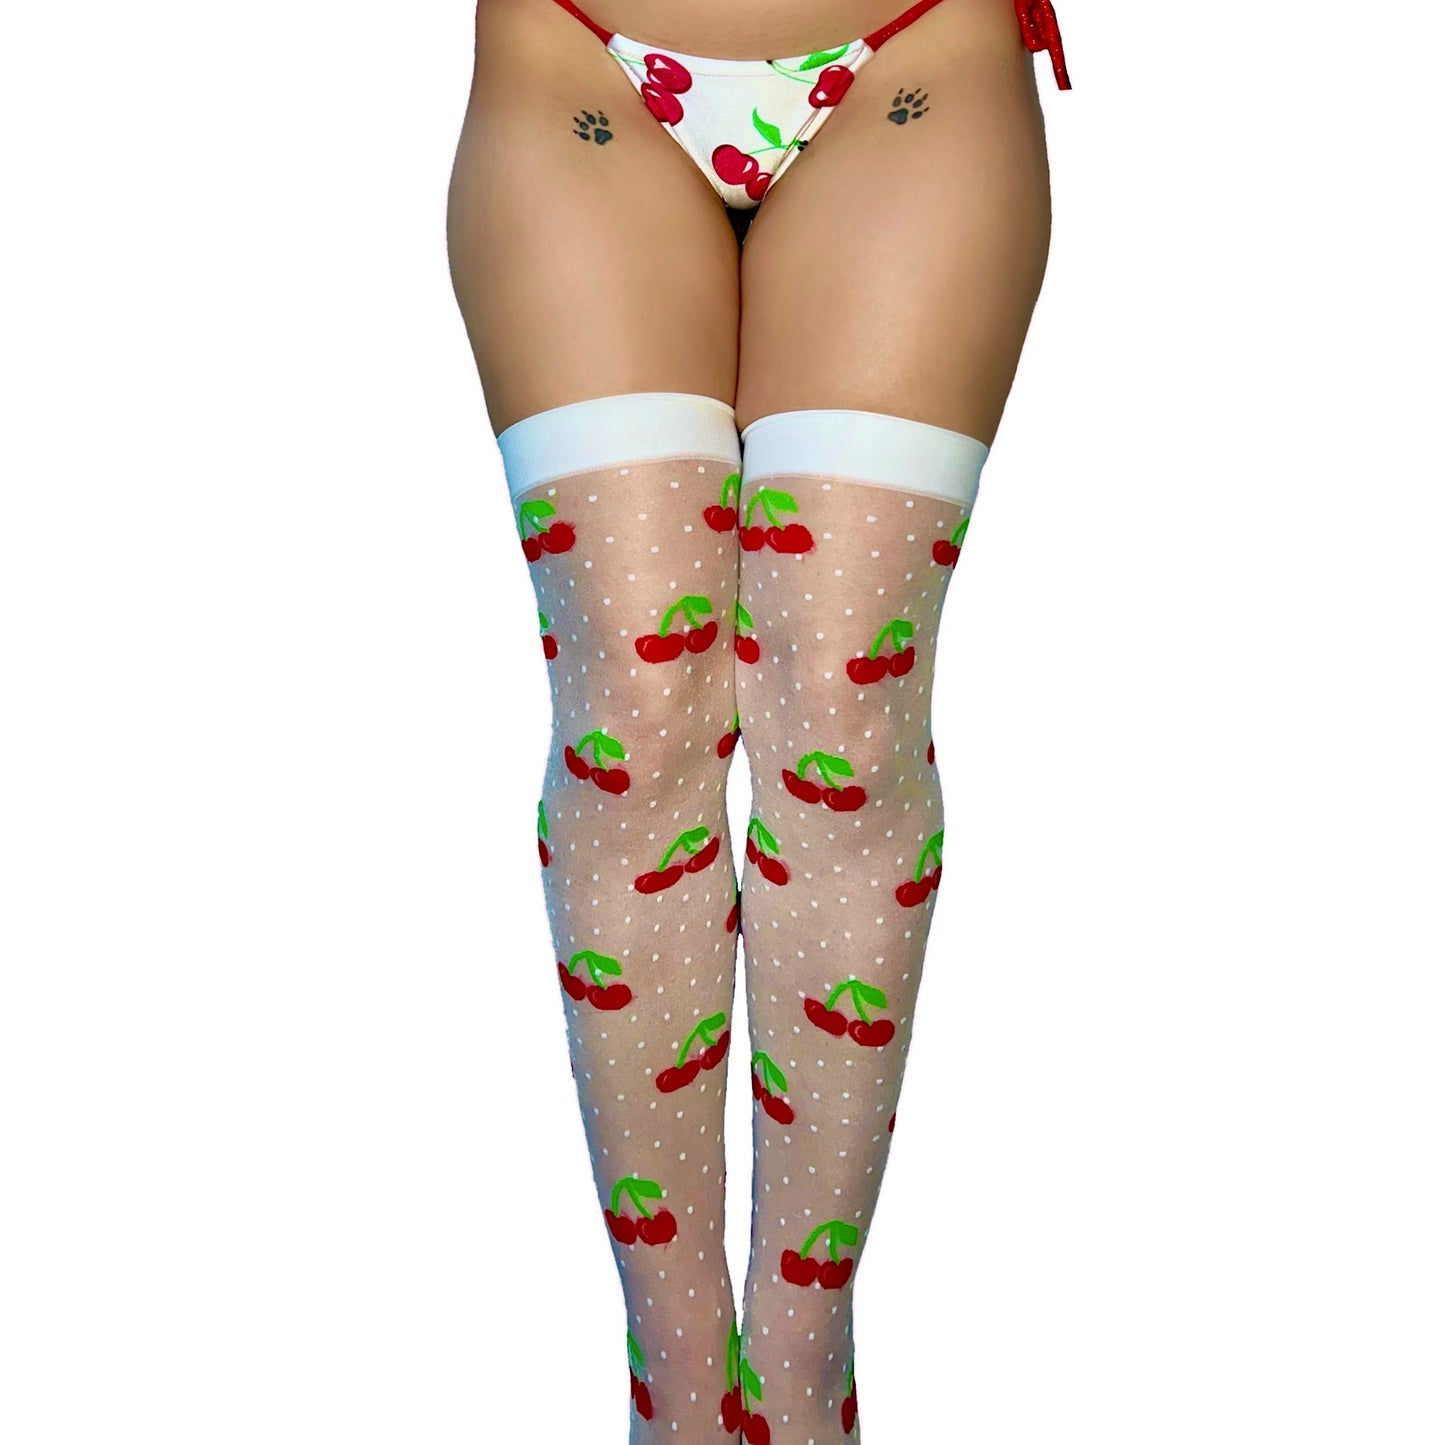 Thigh High Stockings: Cherry Pie